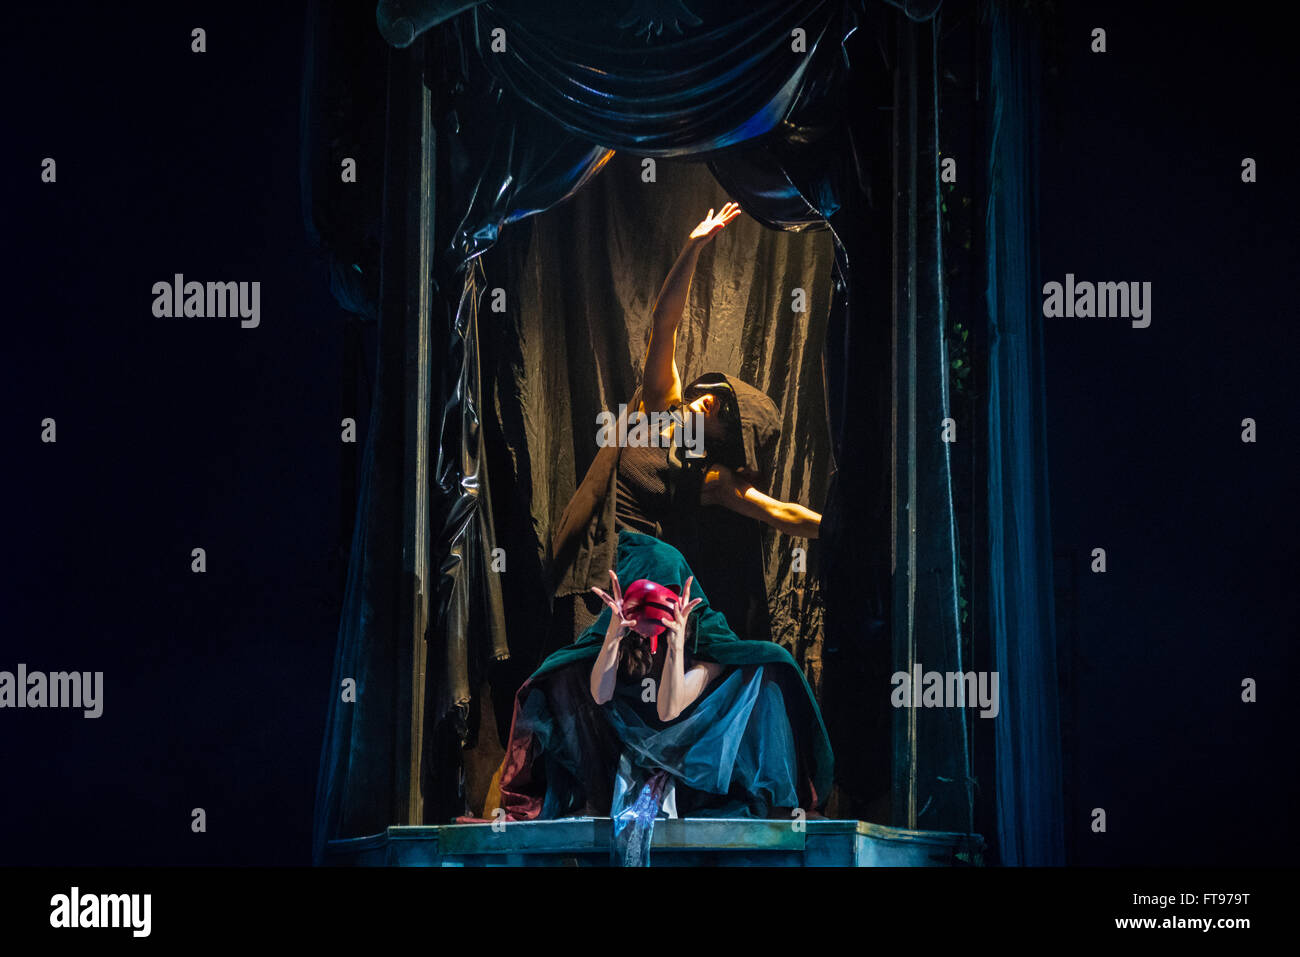 London, UK. 25th March, 2016. balletLORENT present Snow White at Sadler's Wells Theatre. photo: Danilo Moroni Credit:  Danilo Moroni/Alamy Live News Stock Photo